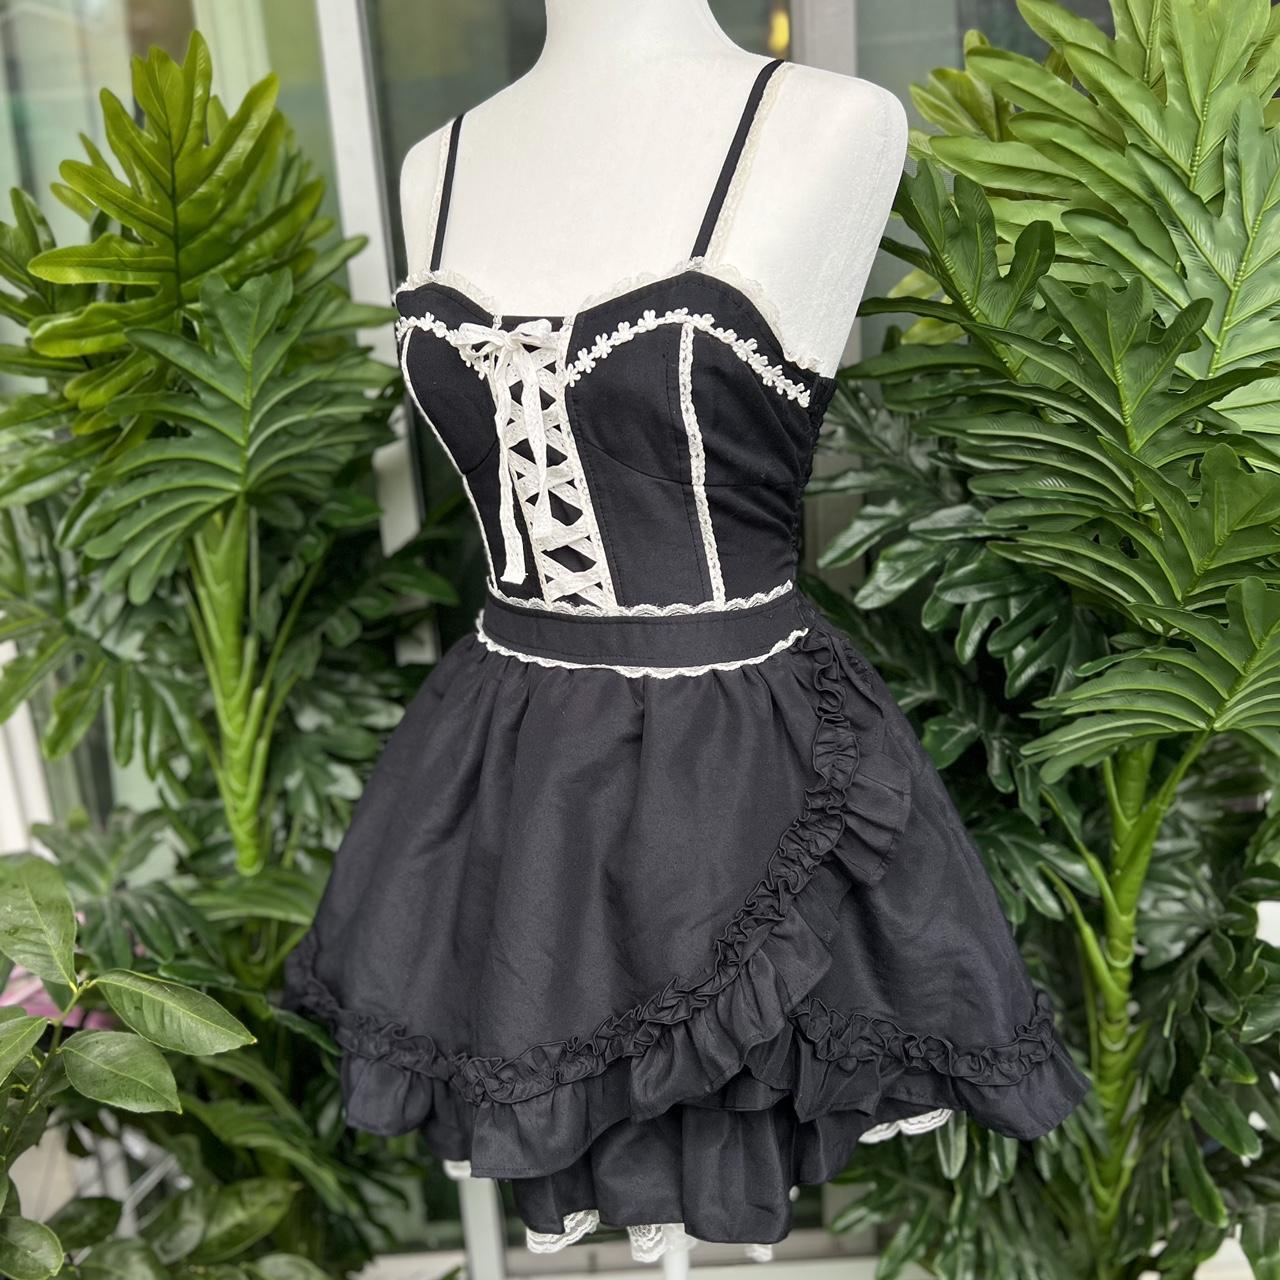 Tralala Gothic Ruffle Corset Dress One Size, best... - Depop